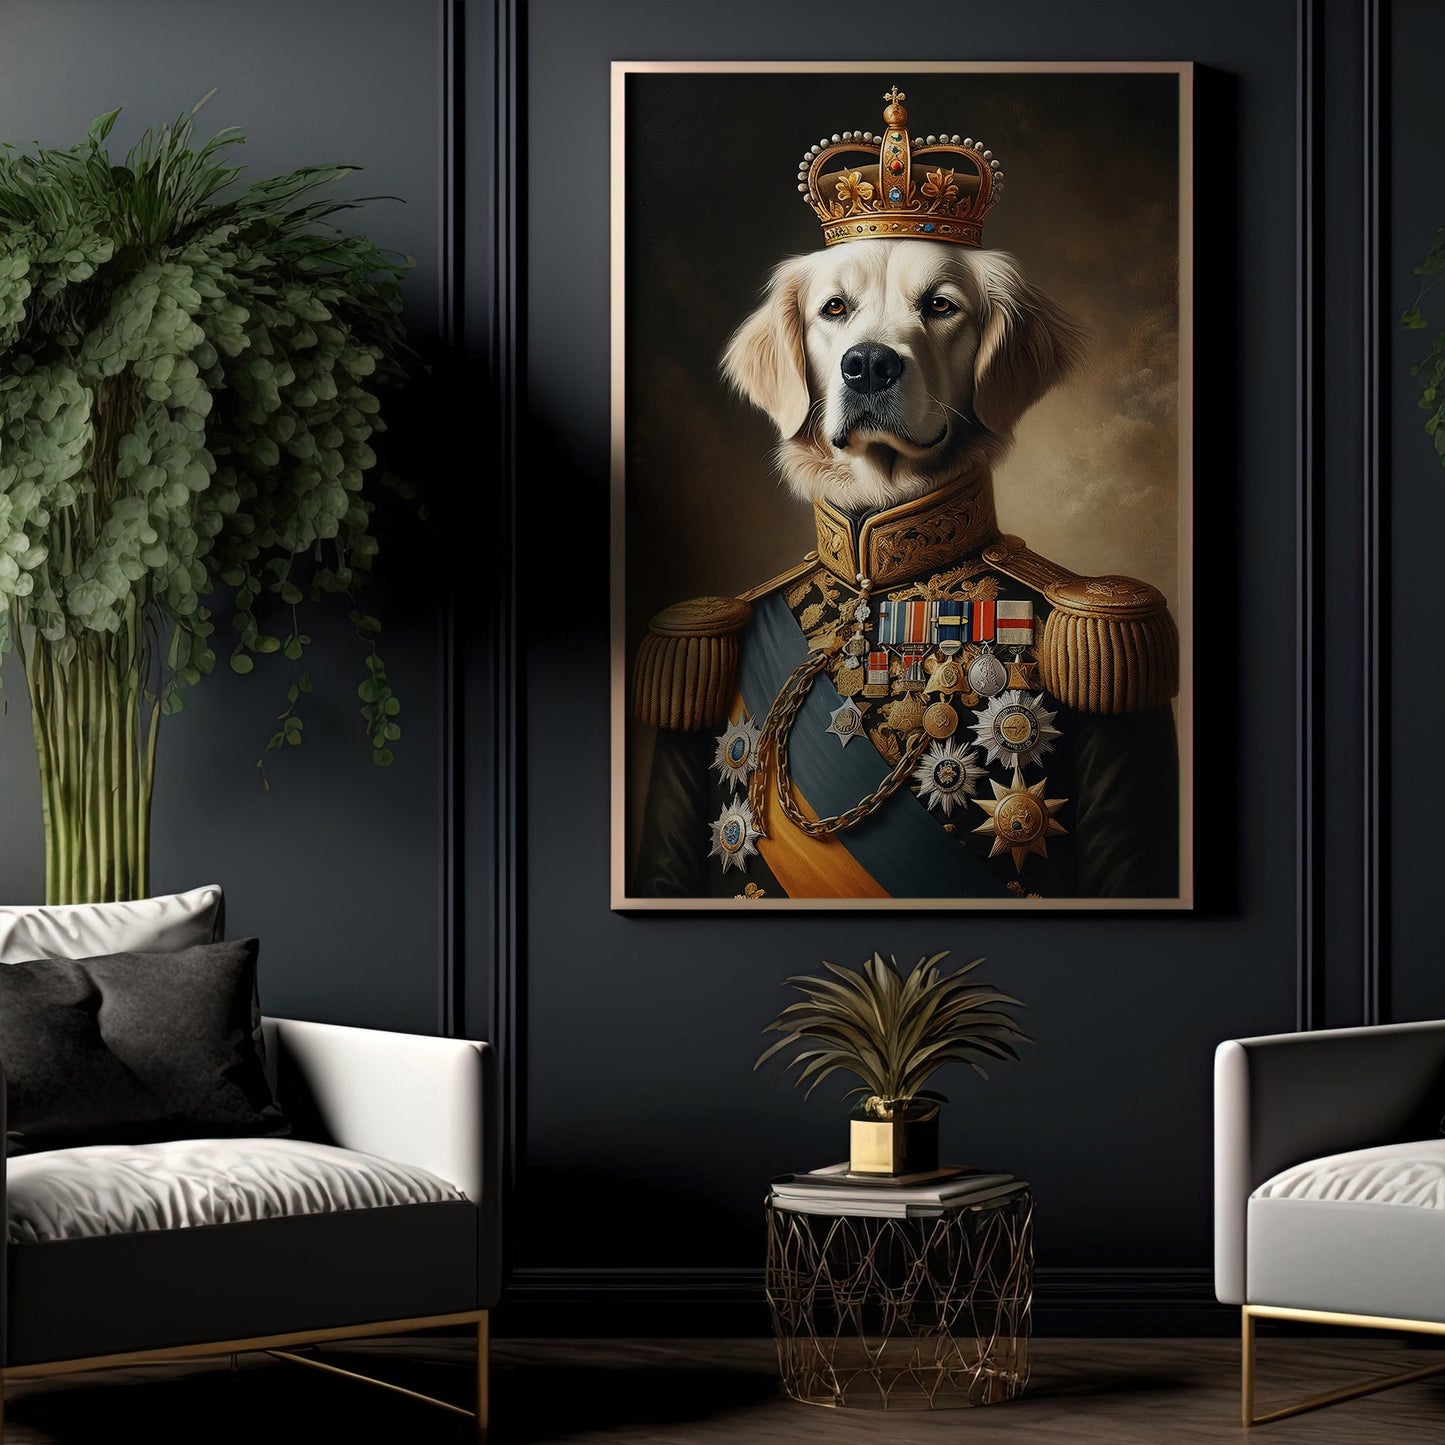 Gentlemen Golden Retriever, Victorian Dog Canvas Painting, Victorian Animal Wall Art Decor, Poster Gift For Gentlemen Golden Retriever Lovers